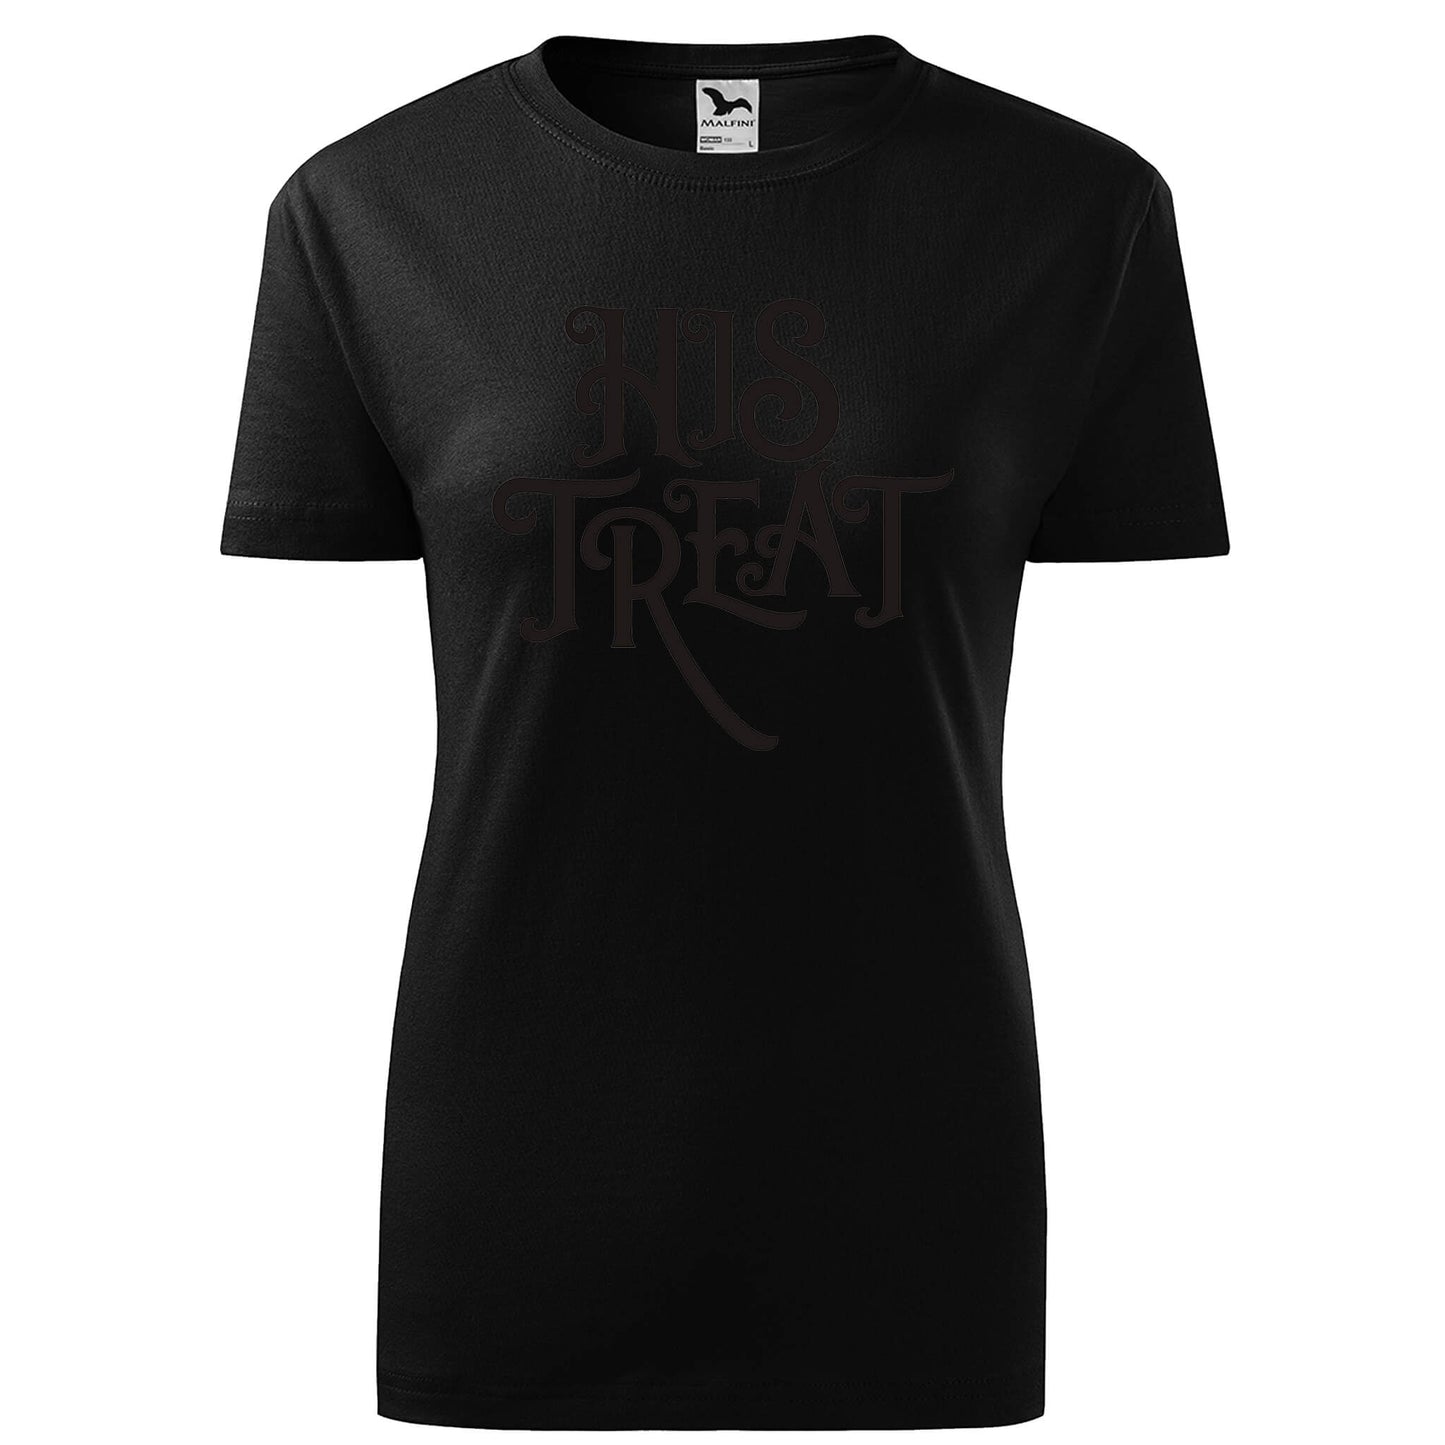 His treat t-shirt - rvdesignprint